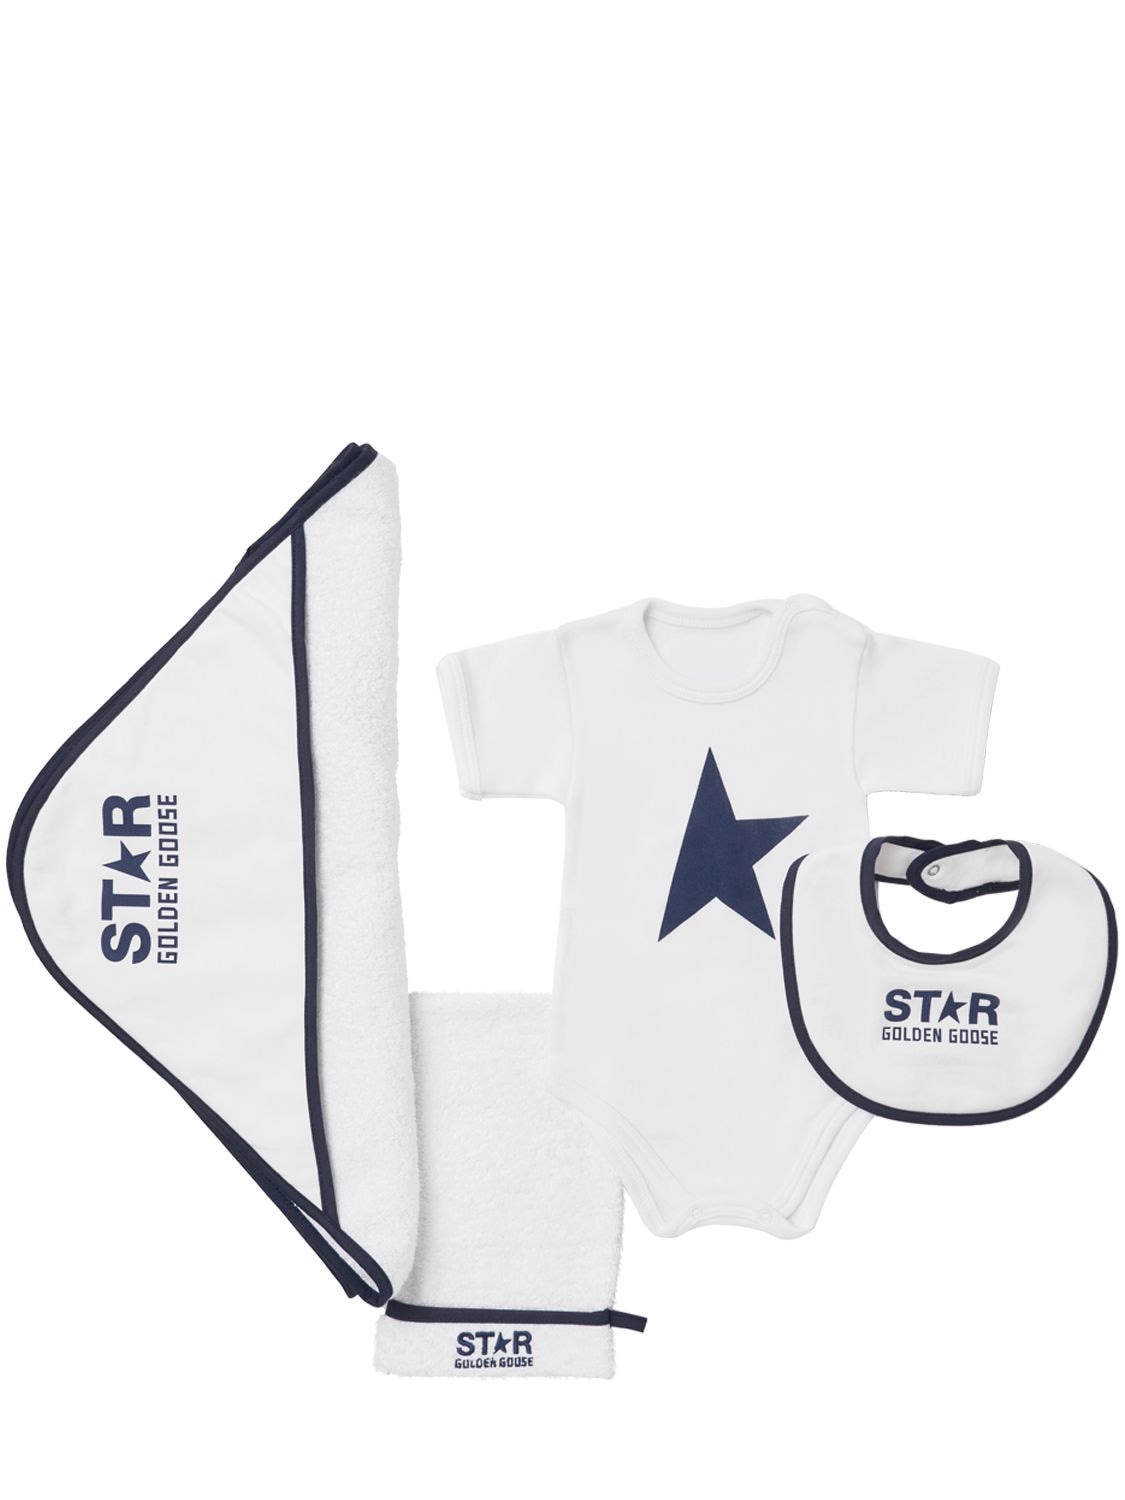 Golden Goose Babies' Star棉质连体衣、围嘴&浴巾套装 In White,blue